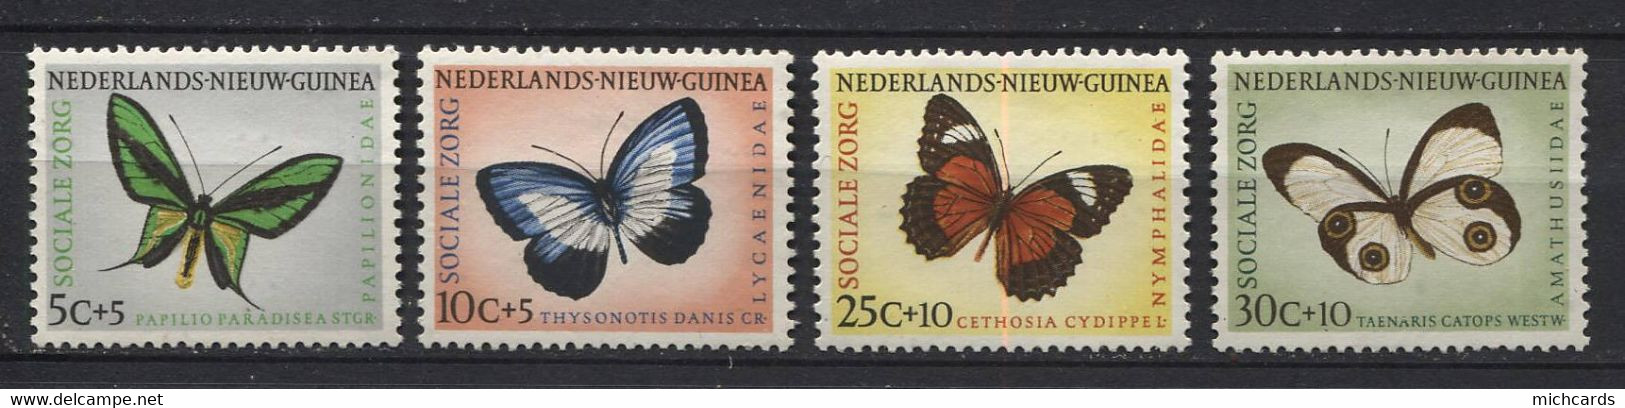 180 NOUVELLE GUINEE NEERLANDAISE 1960 - Y&T 58/61 - Papillon - Oiseau - Neuf ** (MNH) Sans Charniere - Nuova Guinea Olandese